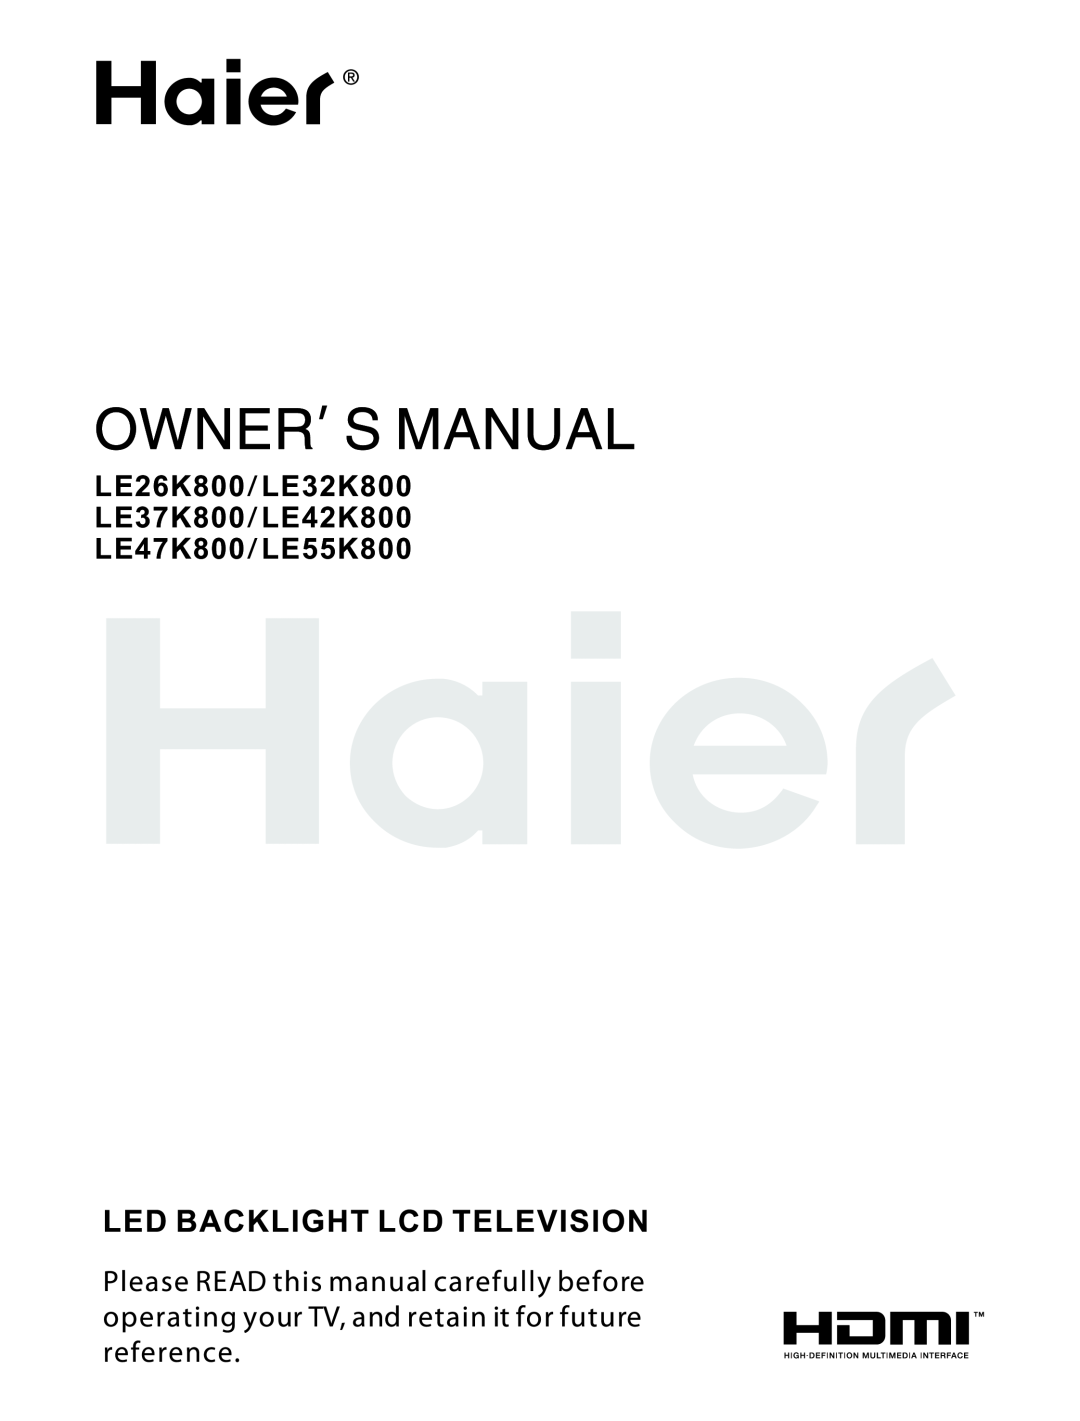 Haier LED Backlight LCD Televison manual LE26K800 LE32K800 LE37K800 LE42K800 LE47K800 LE55K800 